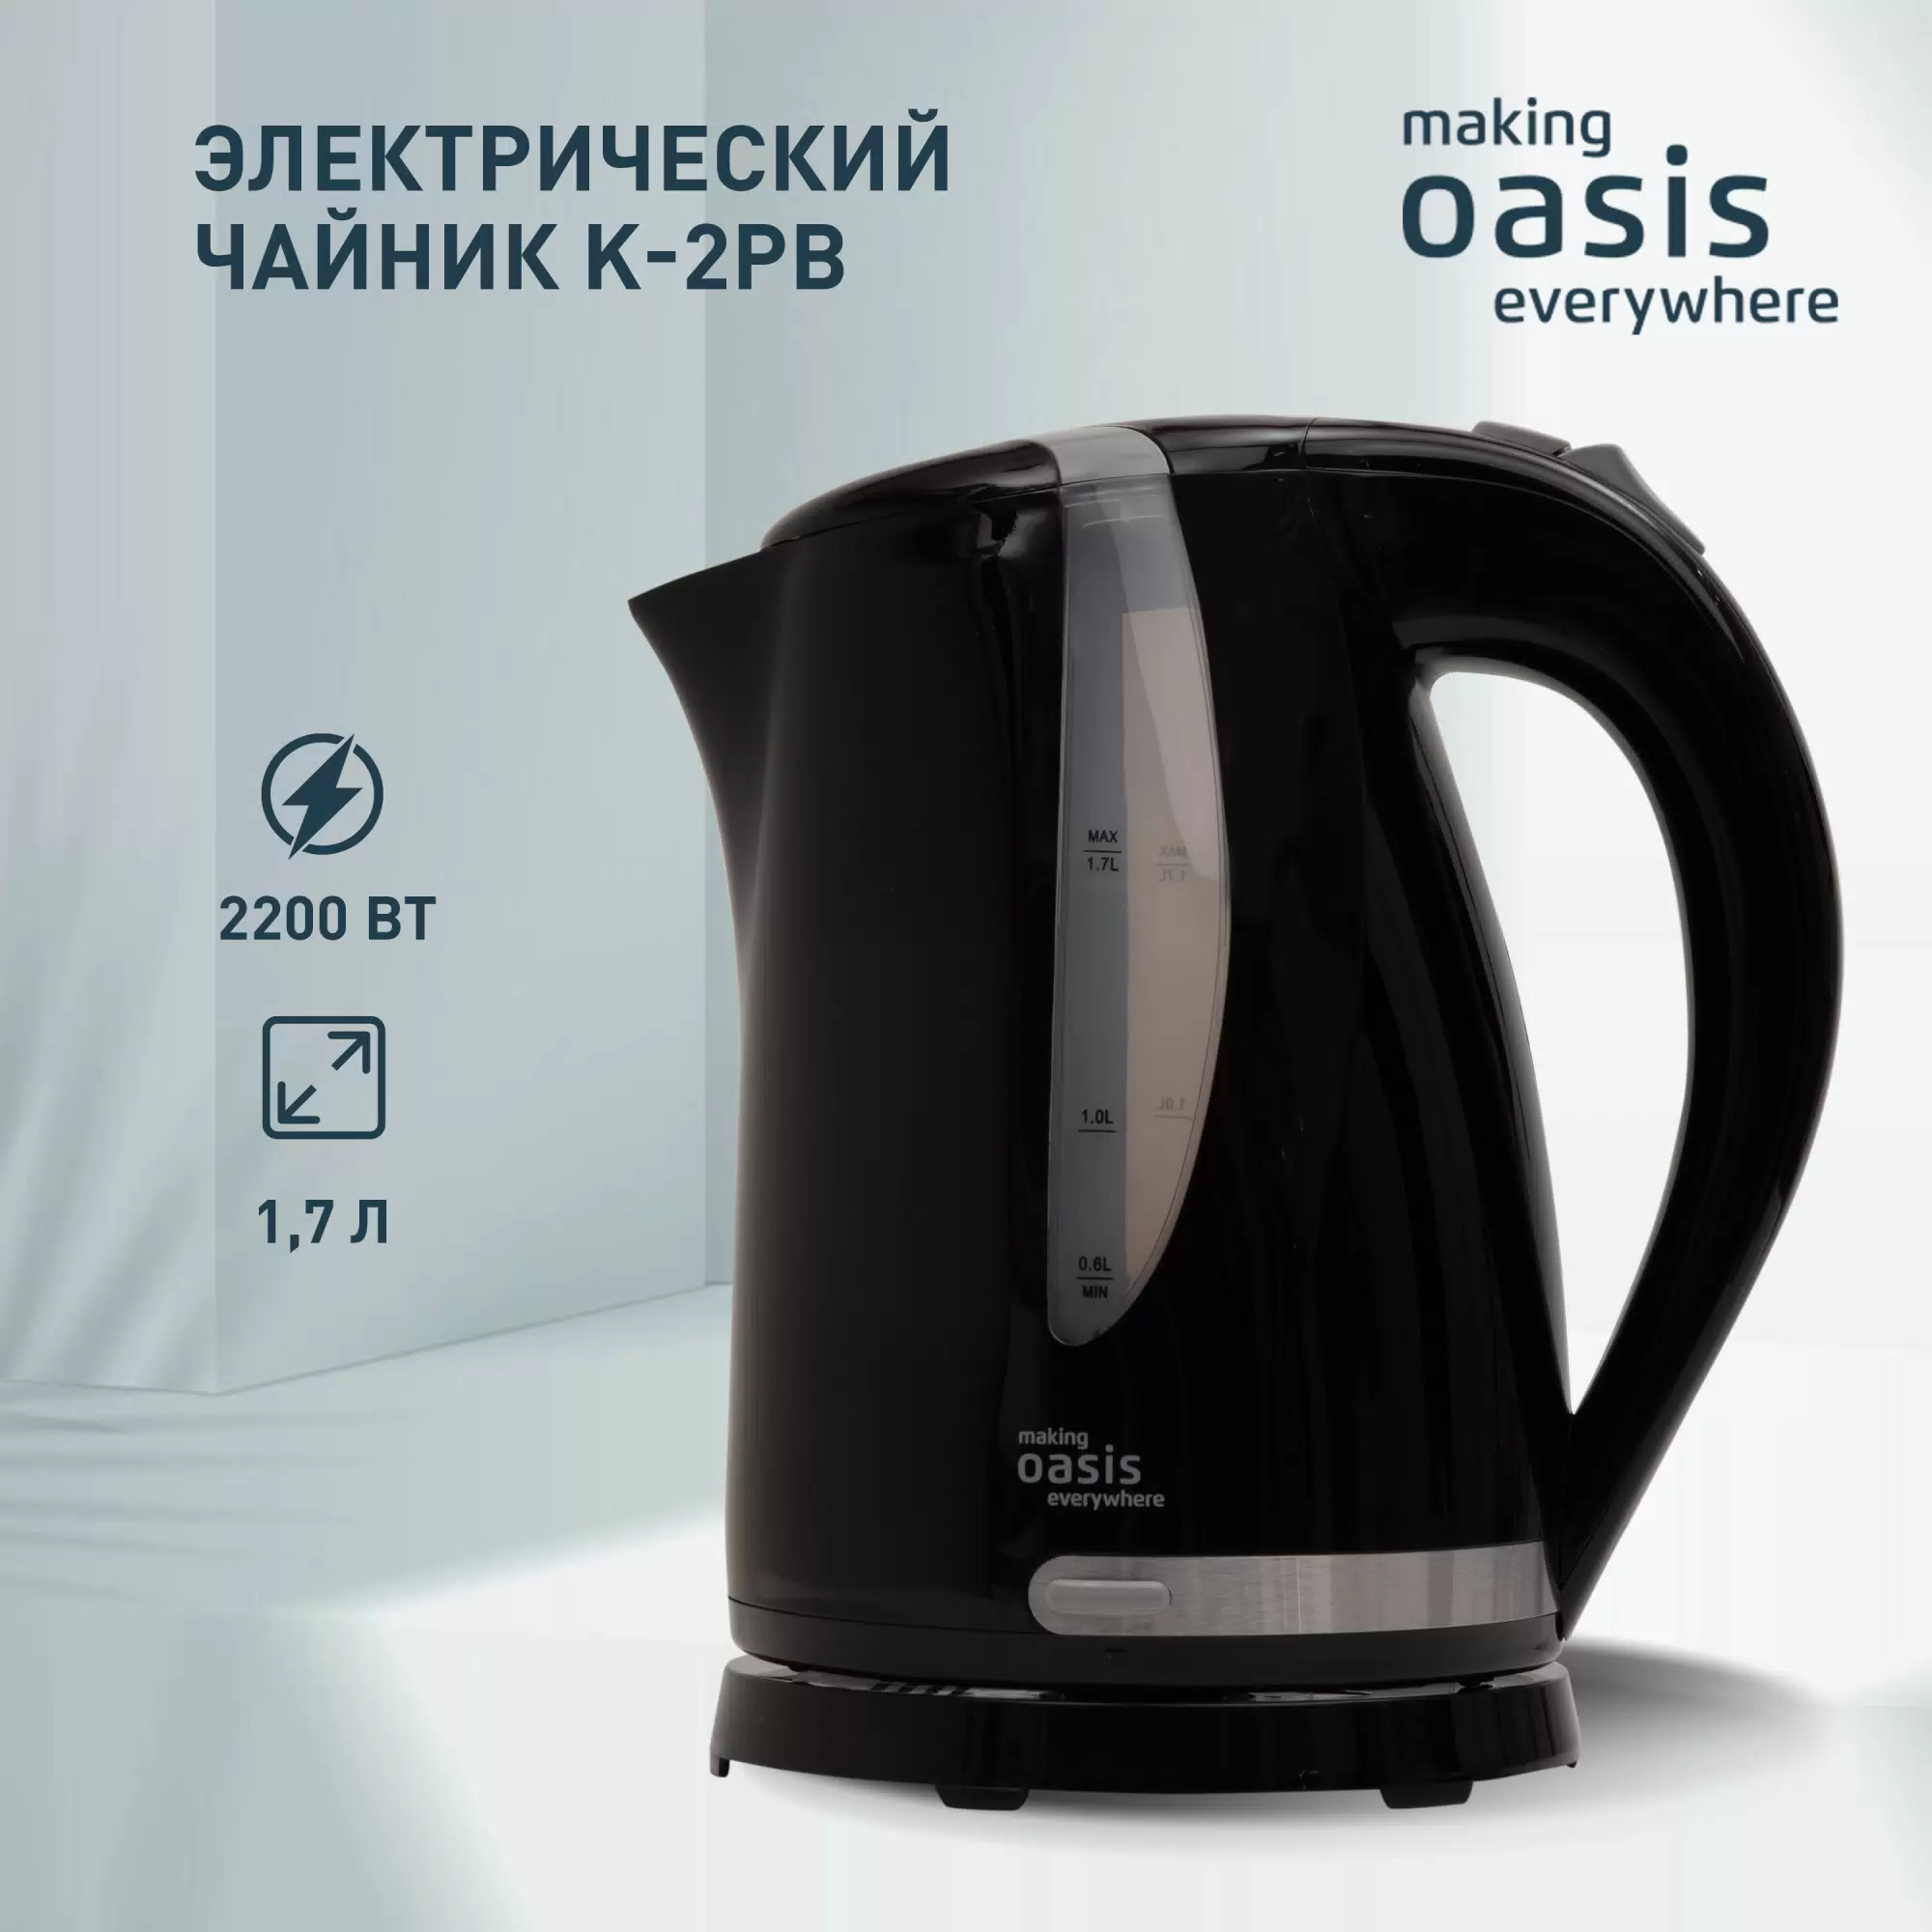 Чайник электрический making oasis everywhere K-2PB 1.7 л черный - VLARNIKA в Донецке